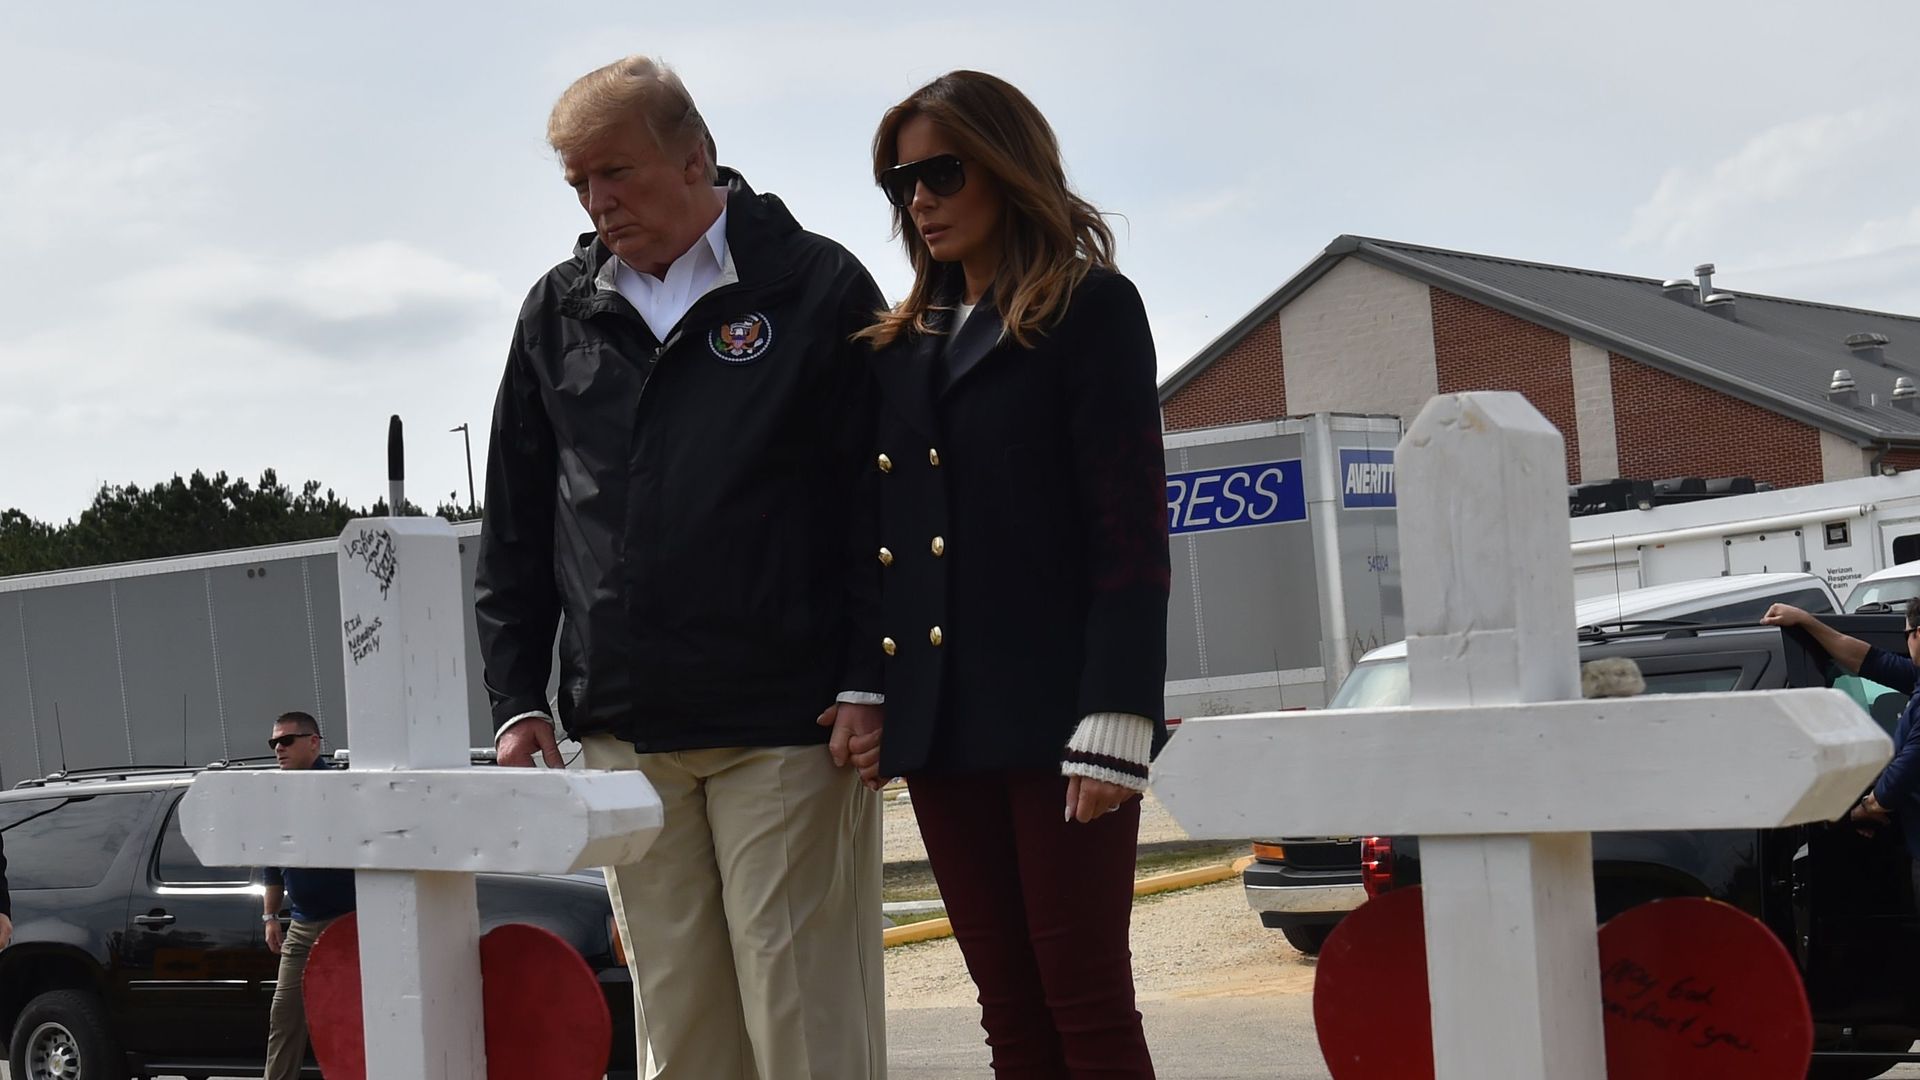 President Trump and Melania Trump view crosses honoring 23 people killed in an Alabama storm.